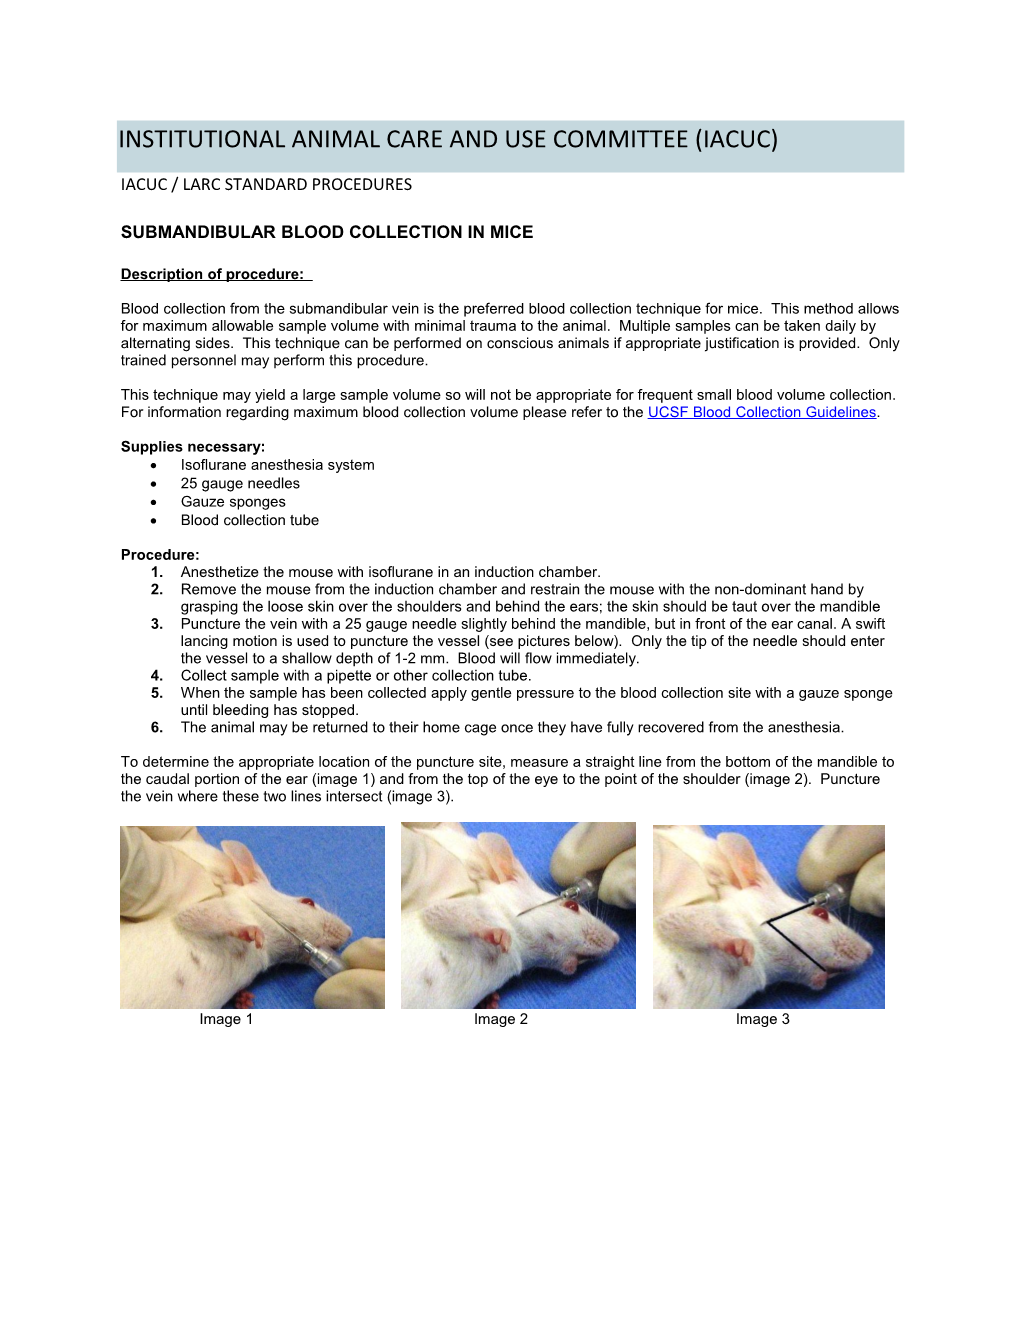 Submandibular Blood Collection in Mice